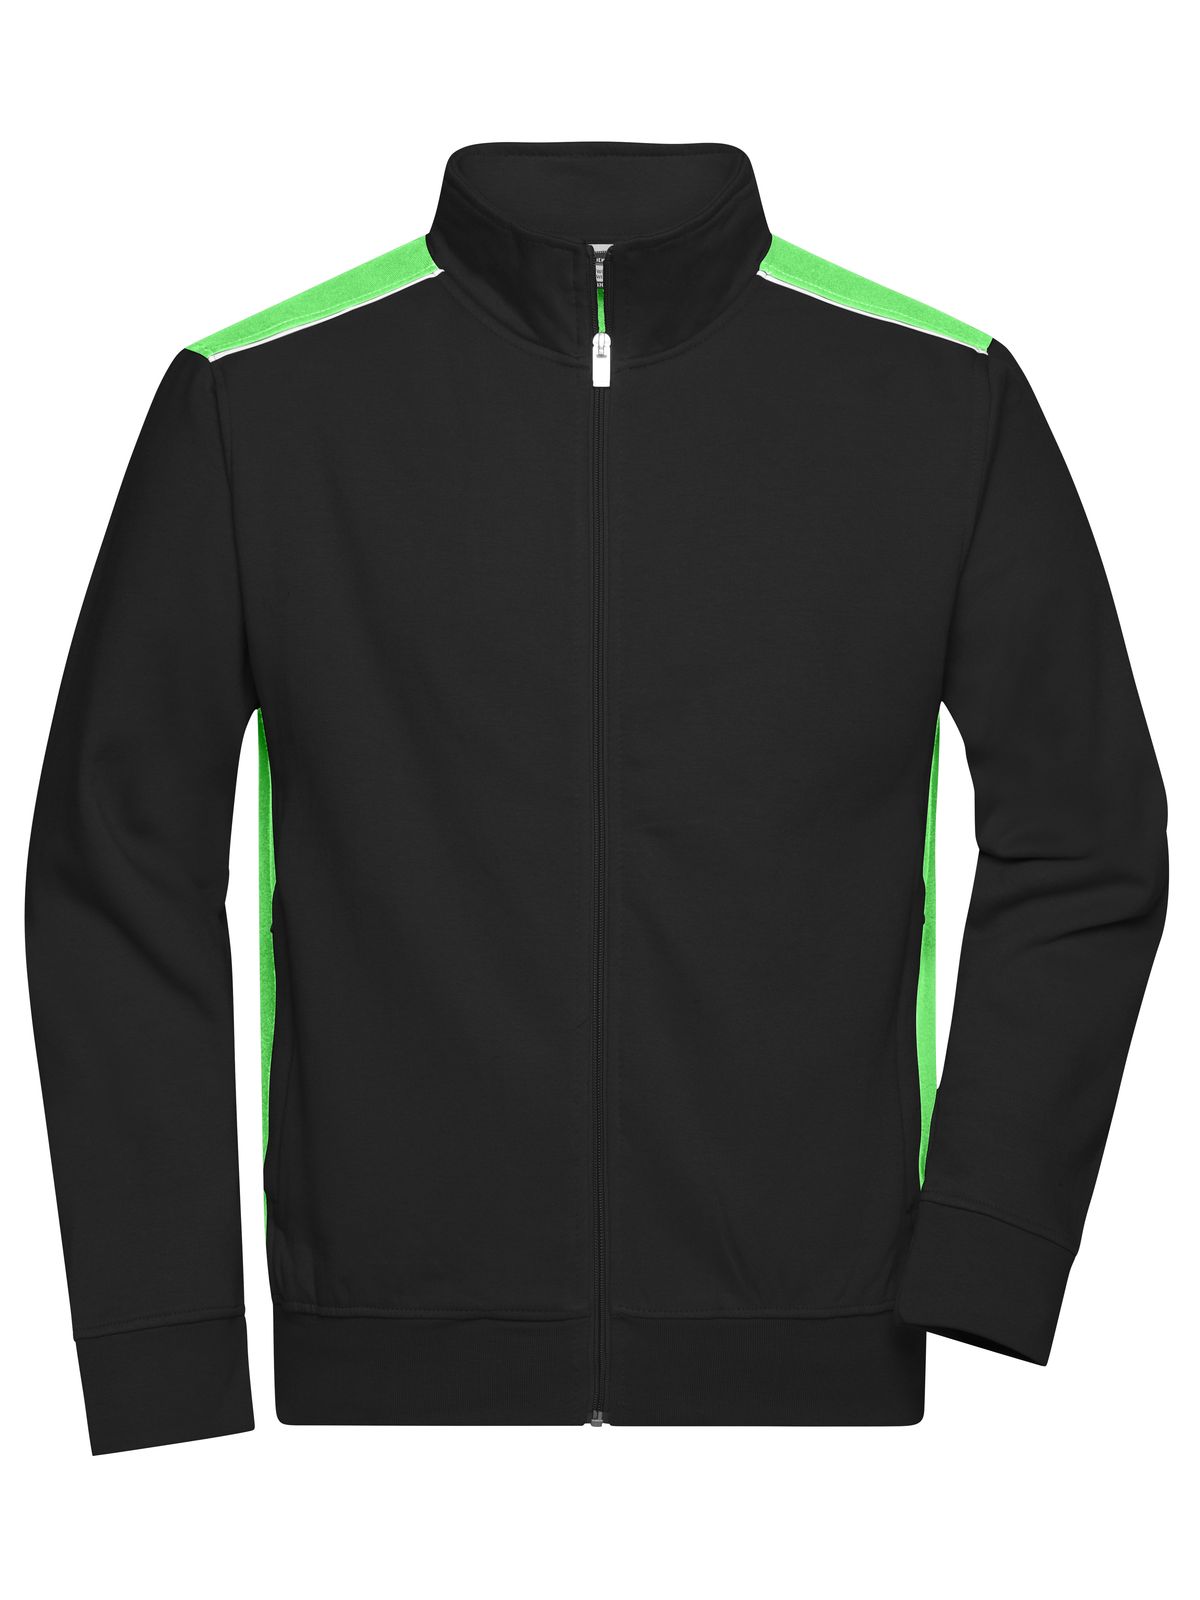 mens-workwear-sweat-jacket-color-black-lime-green.webp